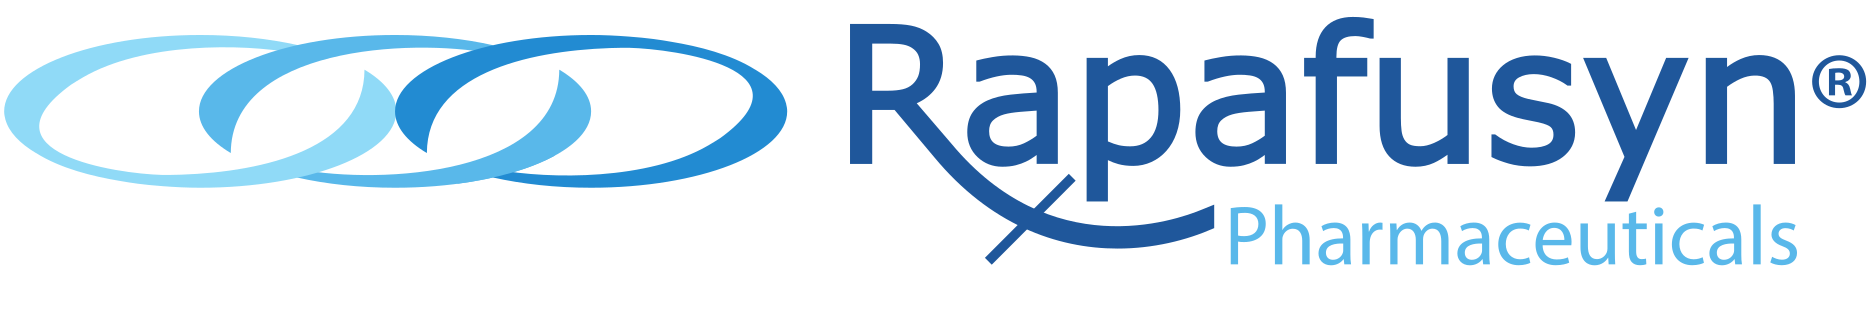 rapafusyn-logo.ai